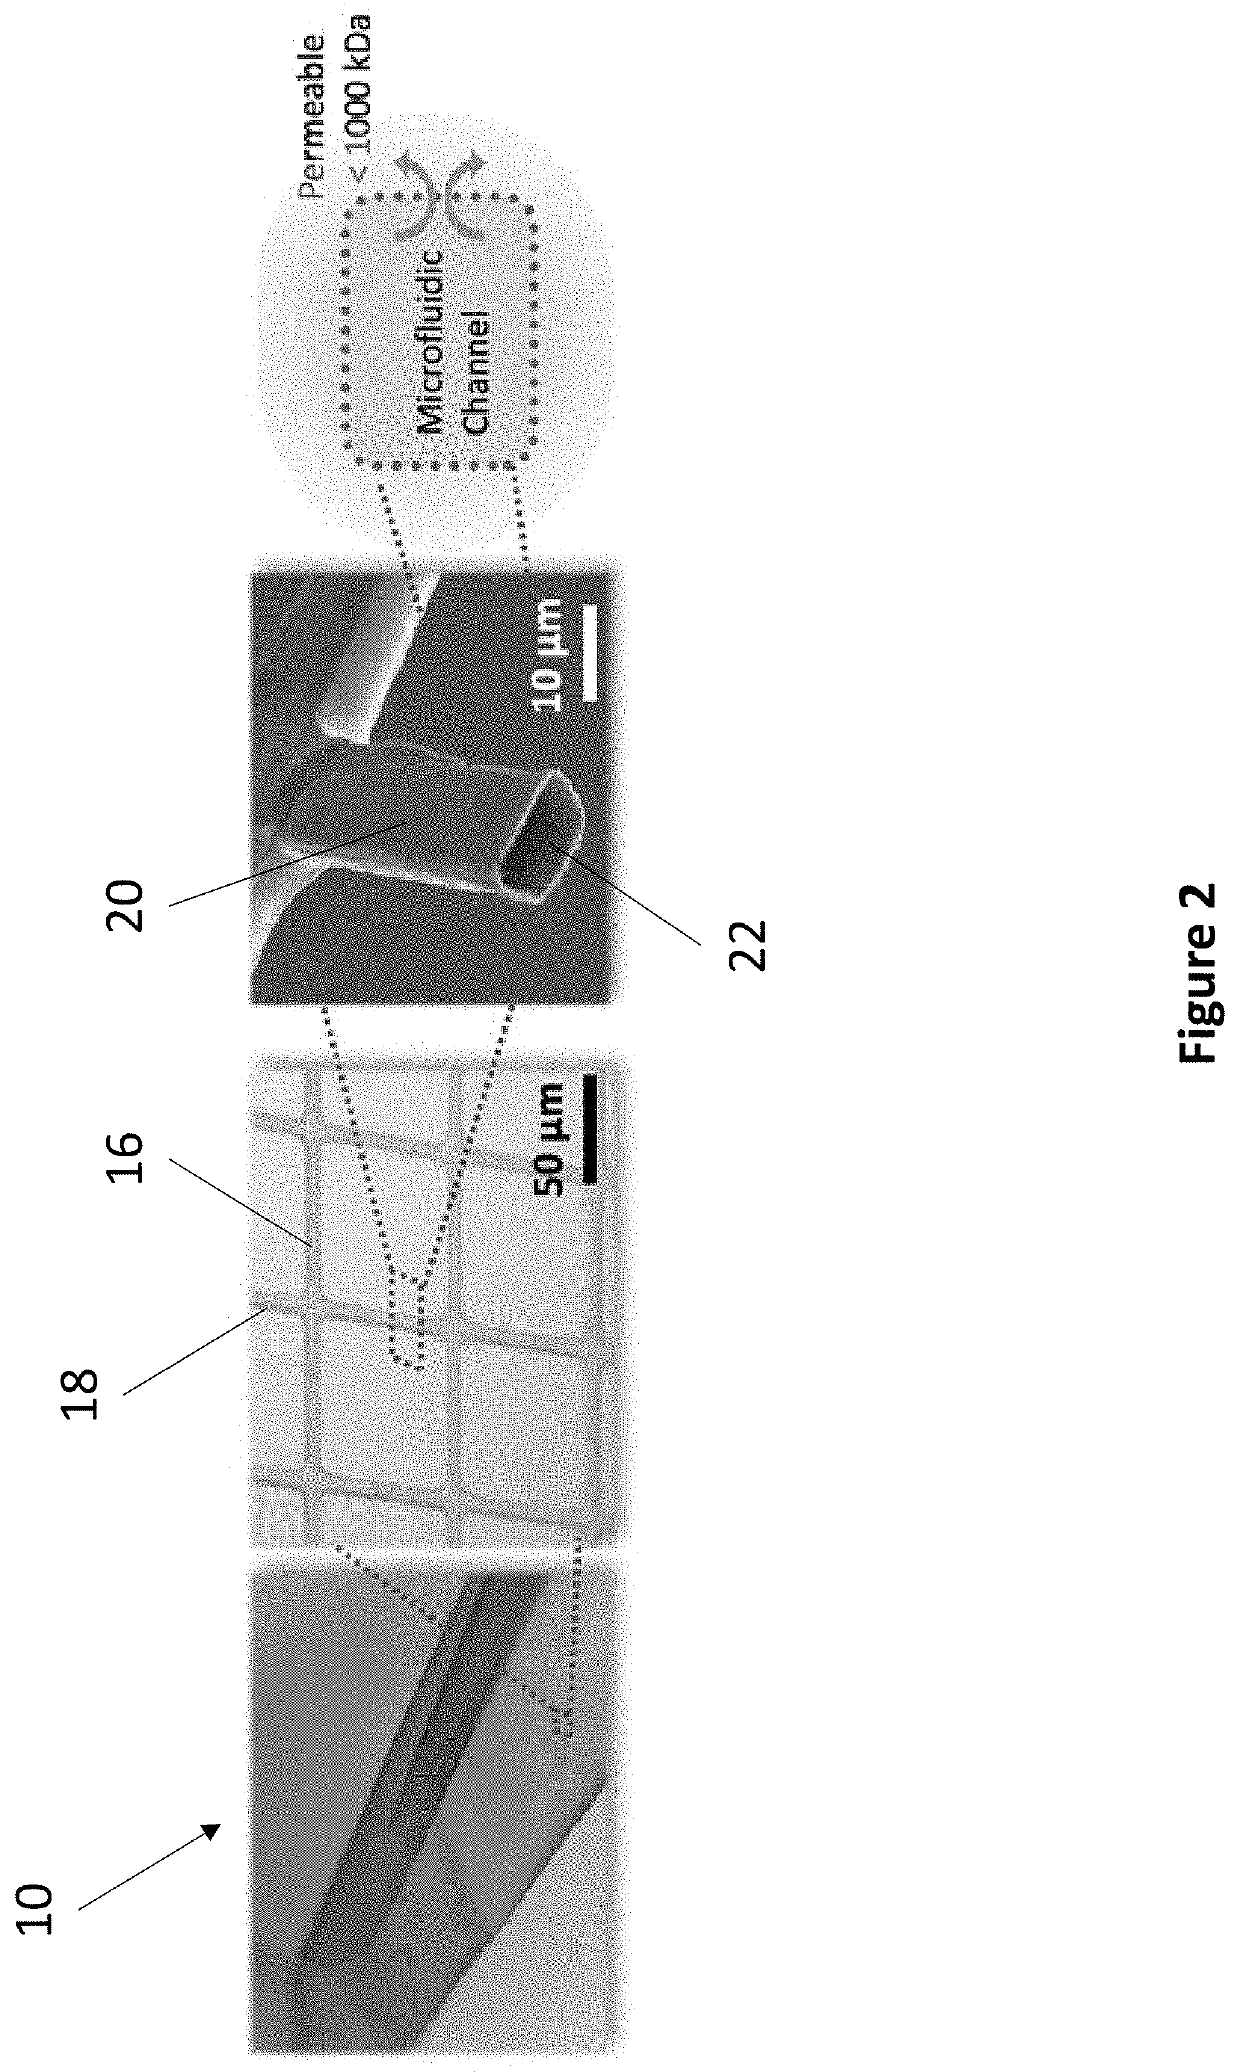 A novel flexible microfluidic meshwork for glaucoma surgery